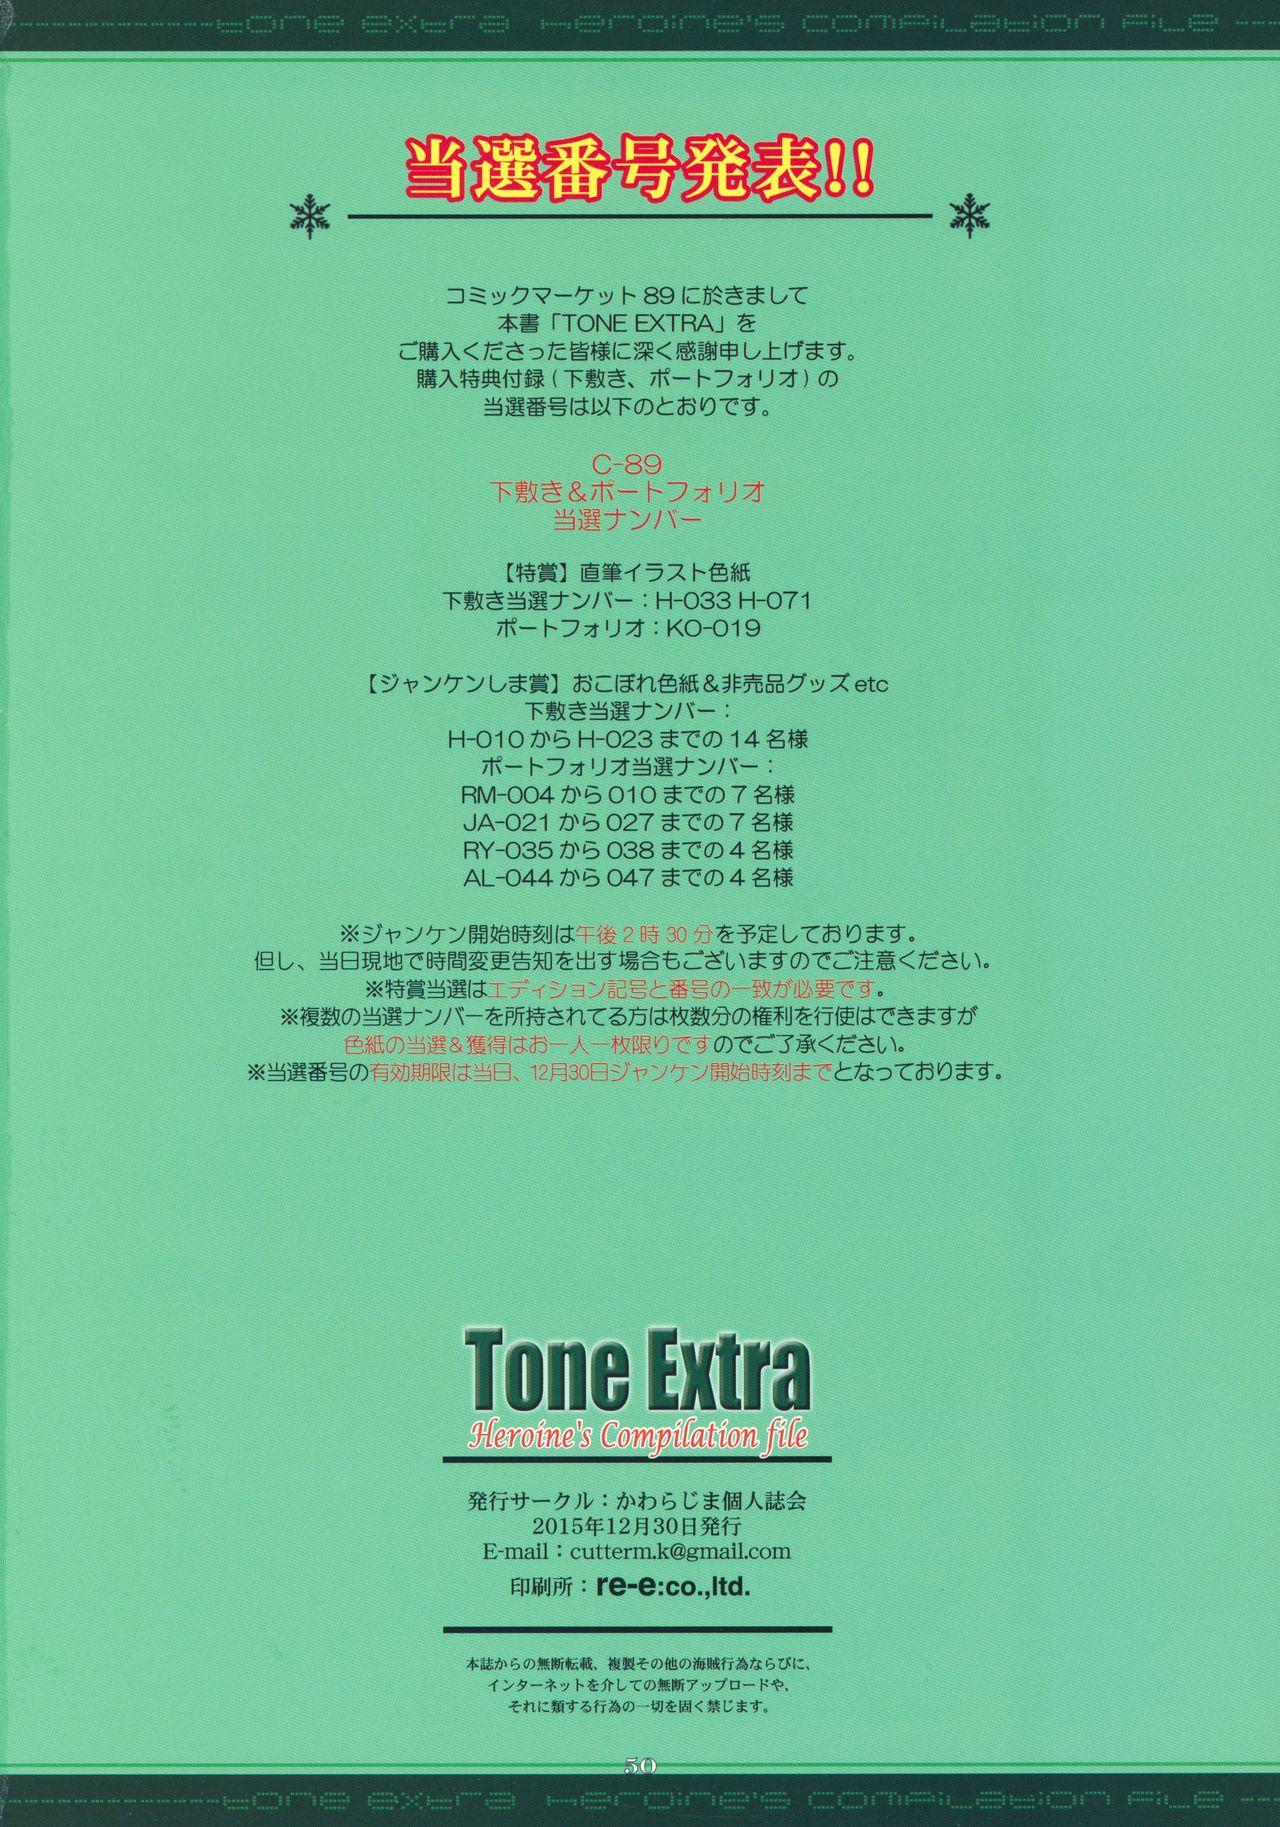 Girlsfucking Tone Extra Heroine's Compilation File - Space battleship yamato 2199 Real Amateur - Page 49